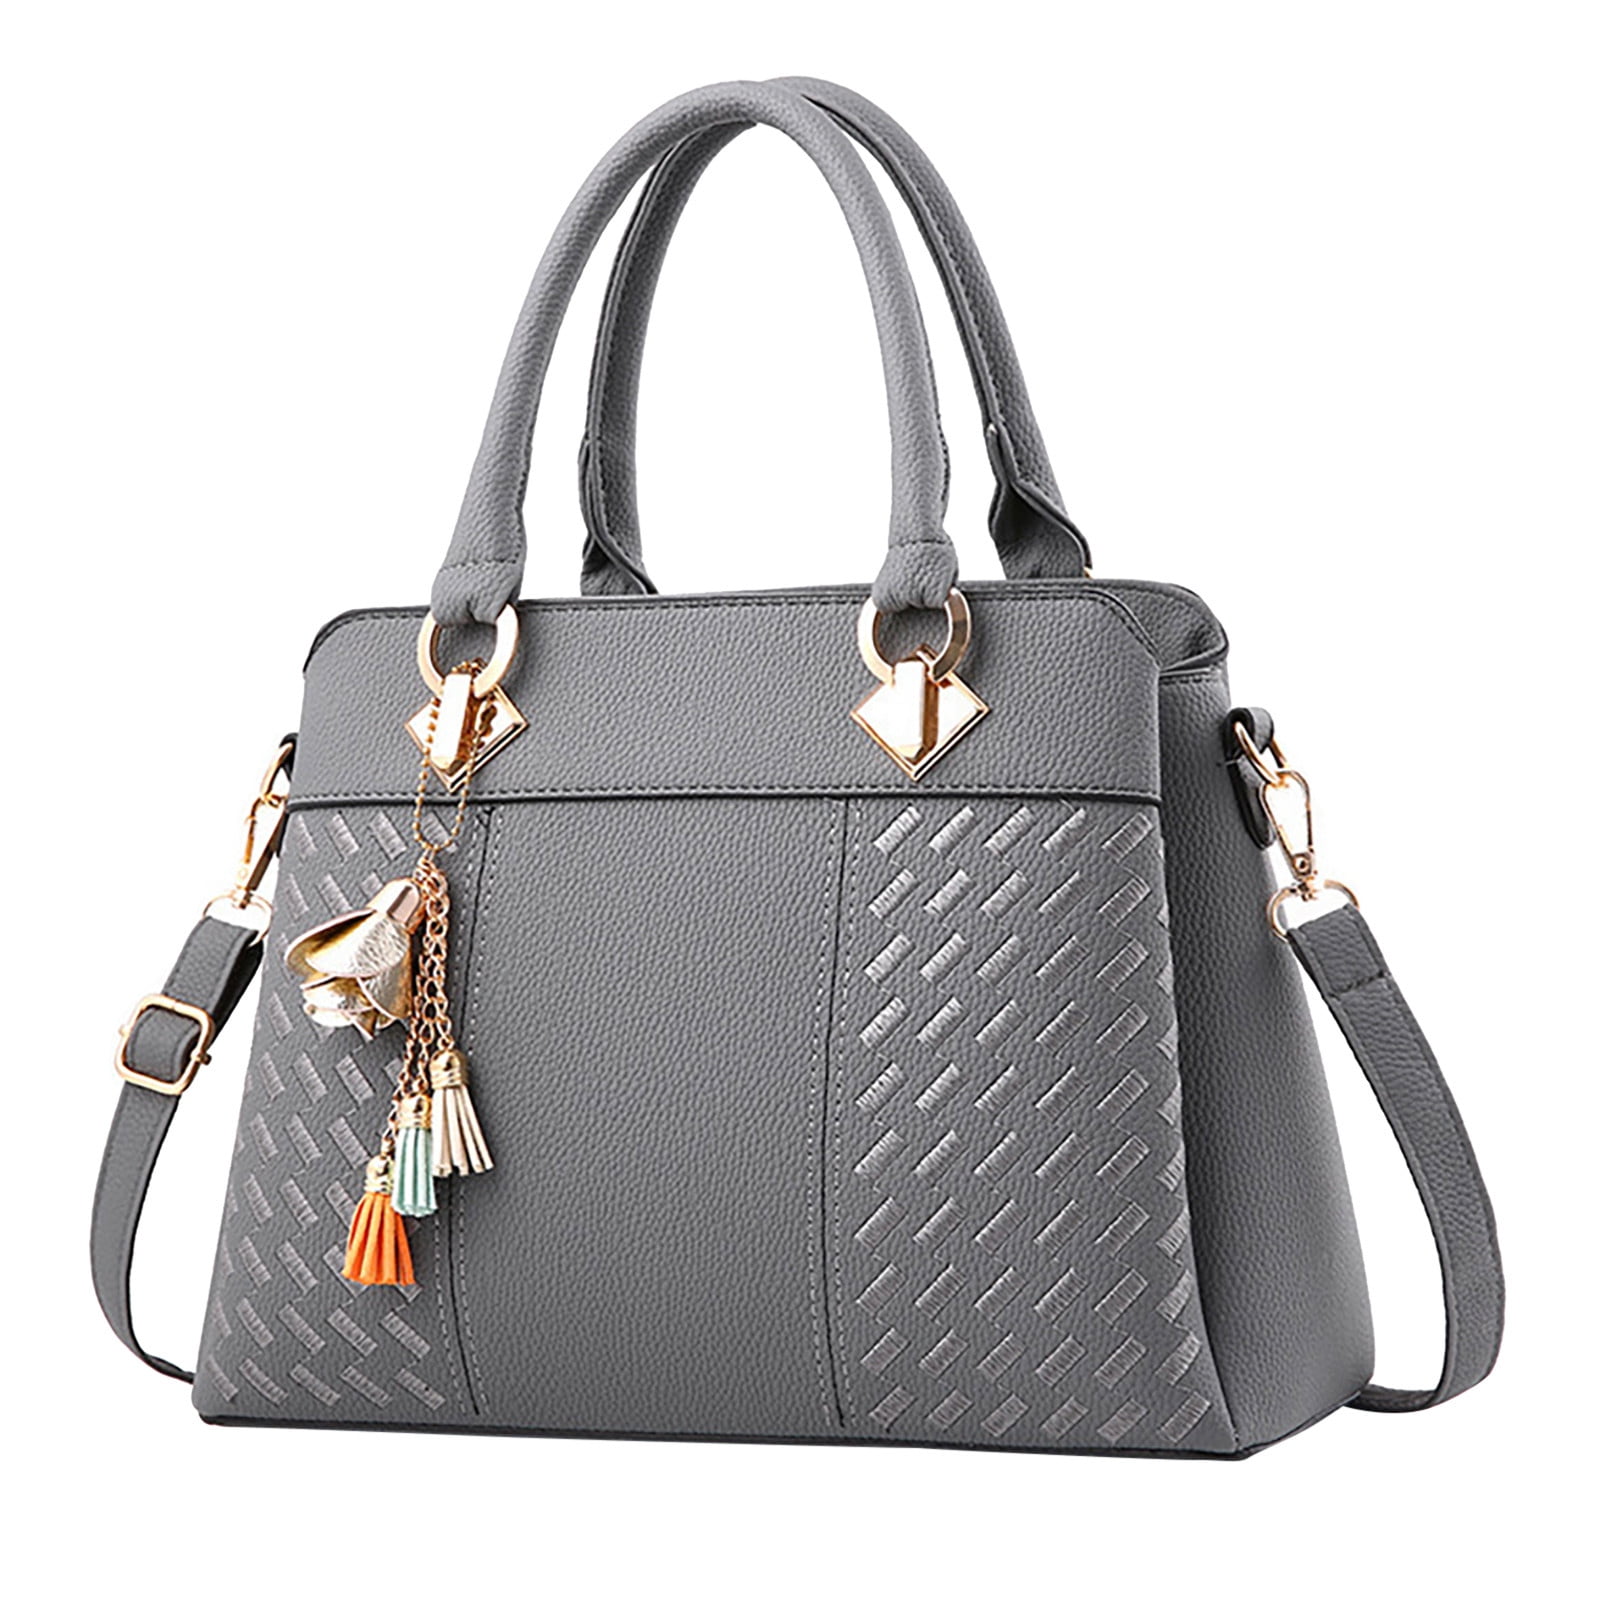 Amazon.com: Soft Leather Handbags